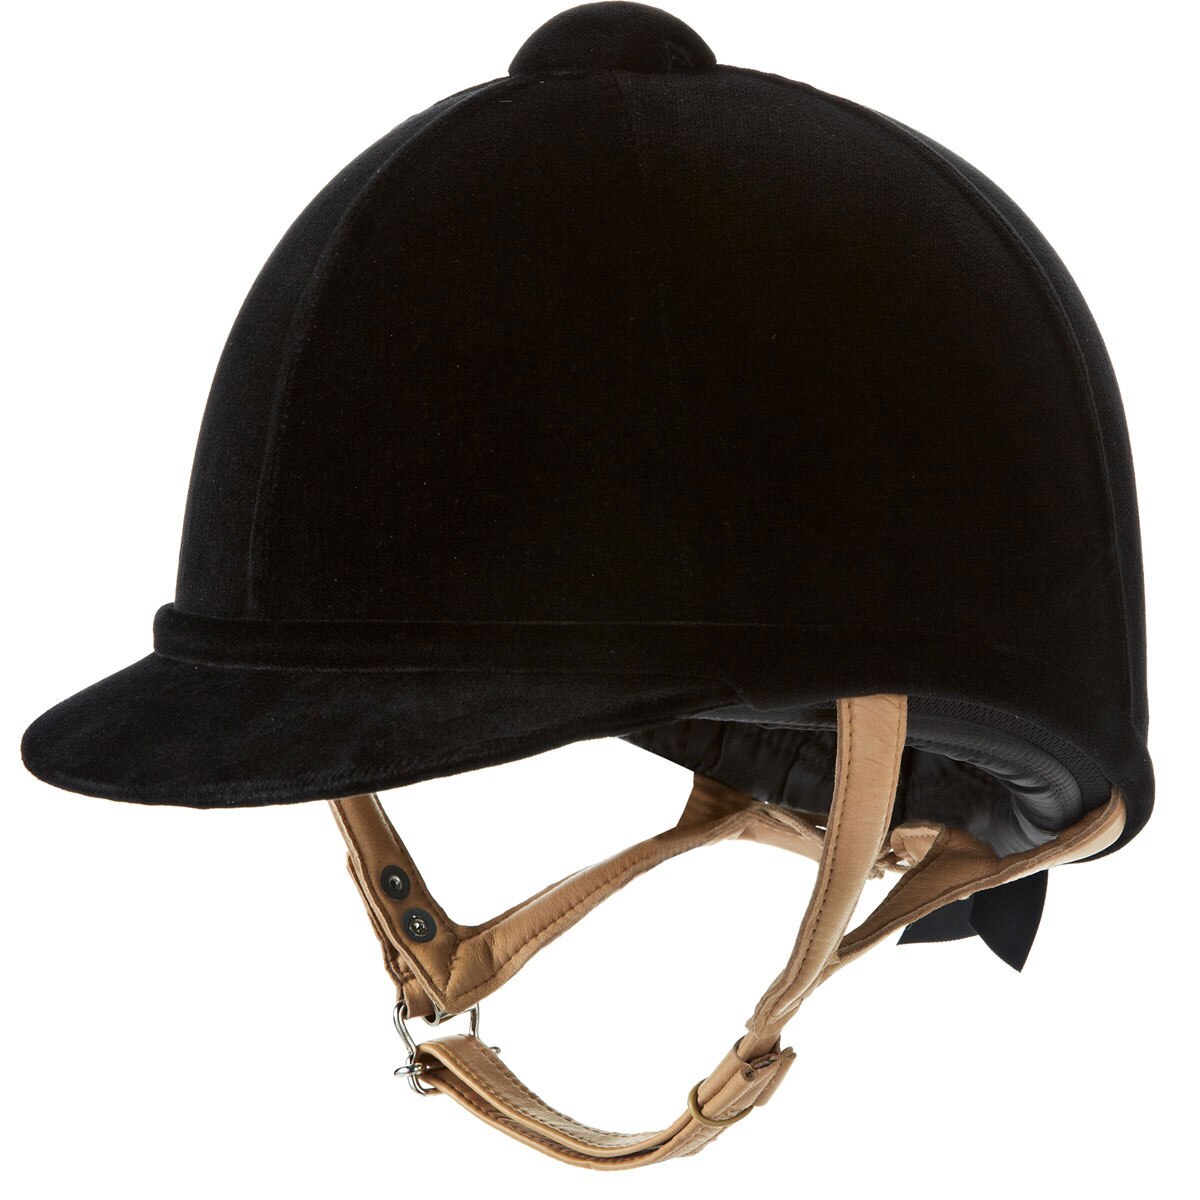 Charles Owen Fian Riding Hat Helmet with Flesh Harness PAS015 ASTM F1163:15 